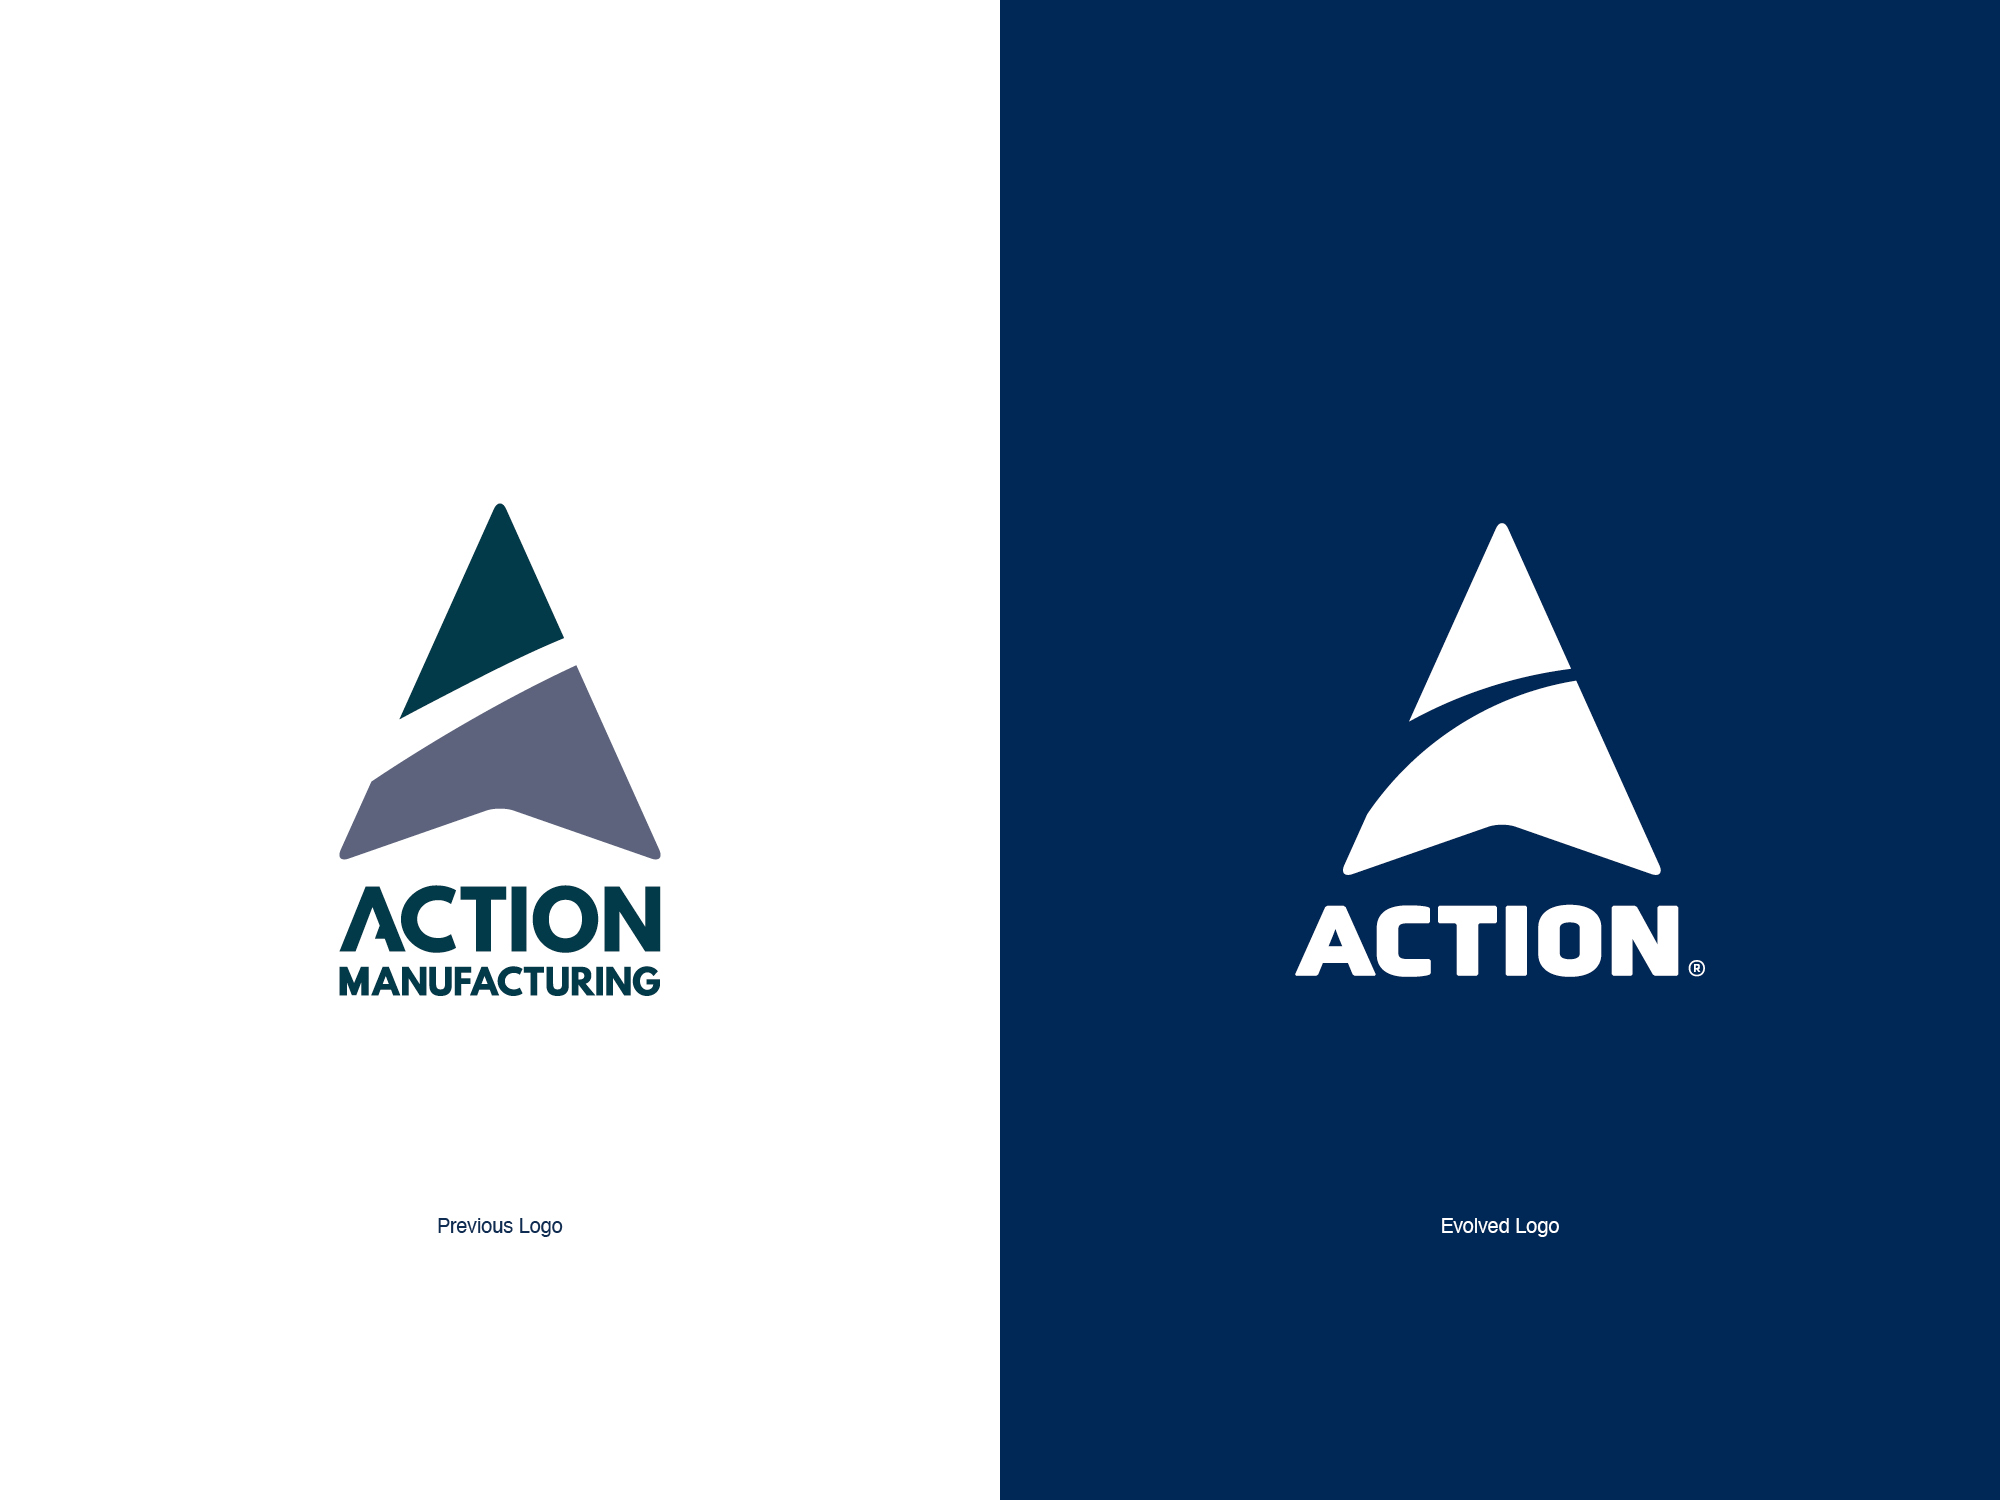 Action Manufacturing Brand Identity Design3